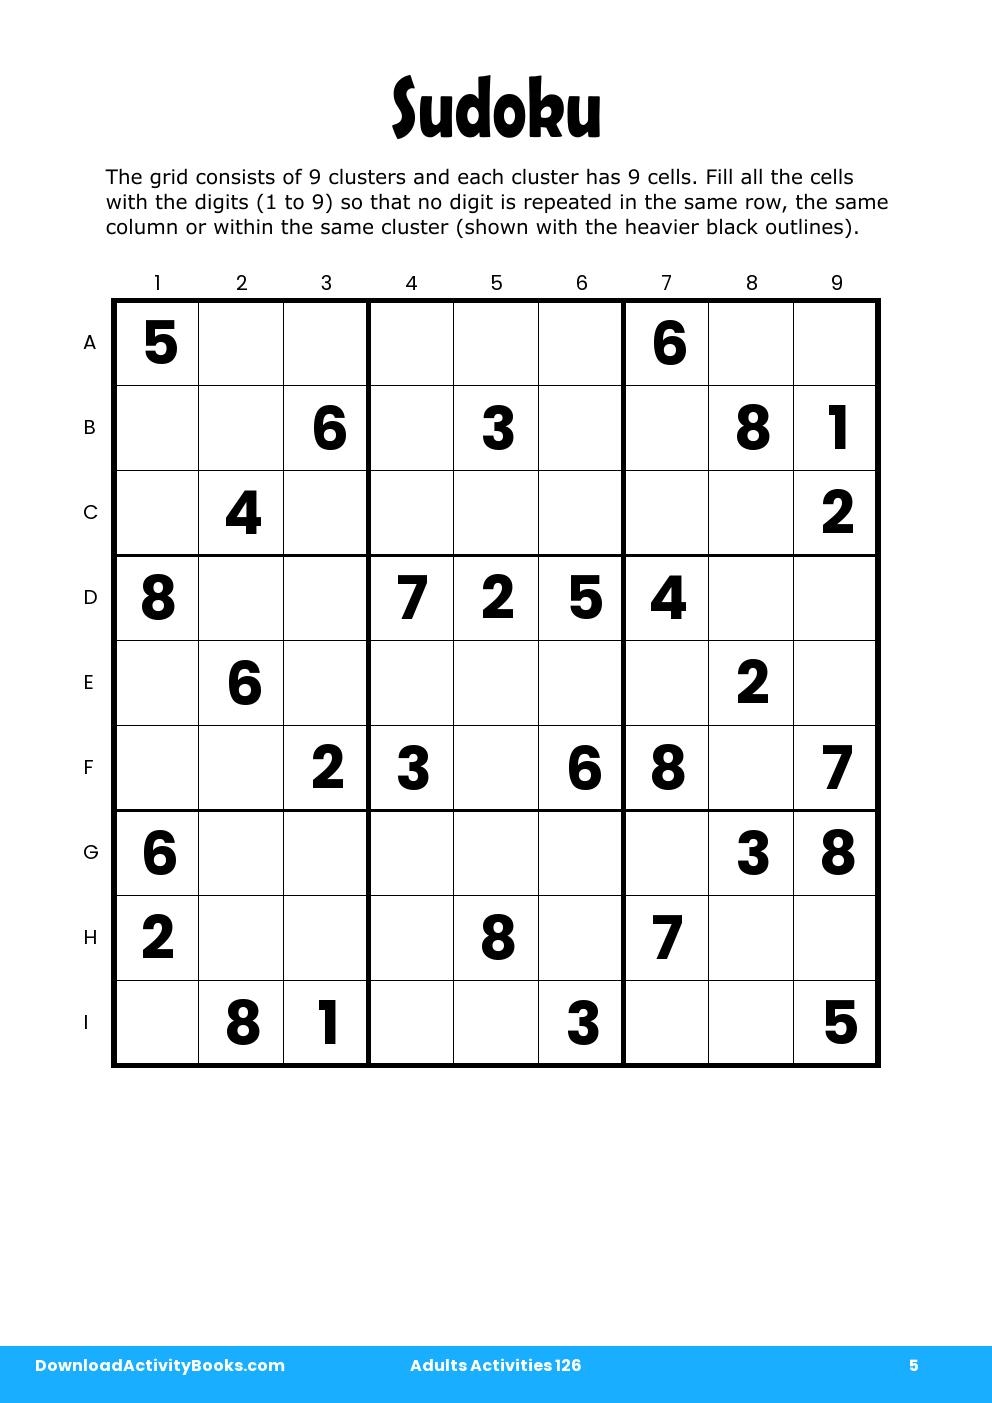 Sudoku in Adults Activities 126